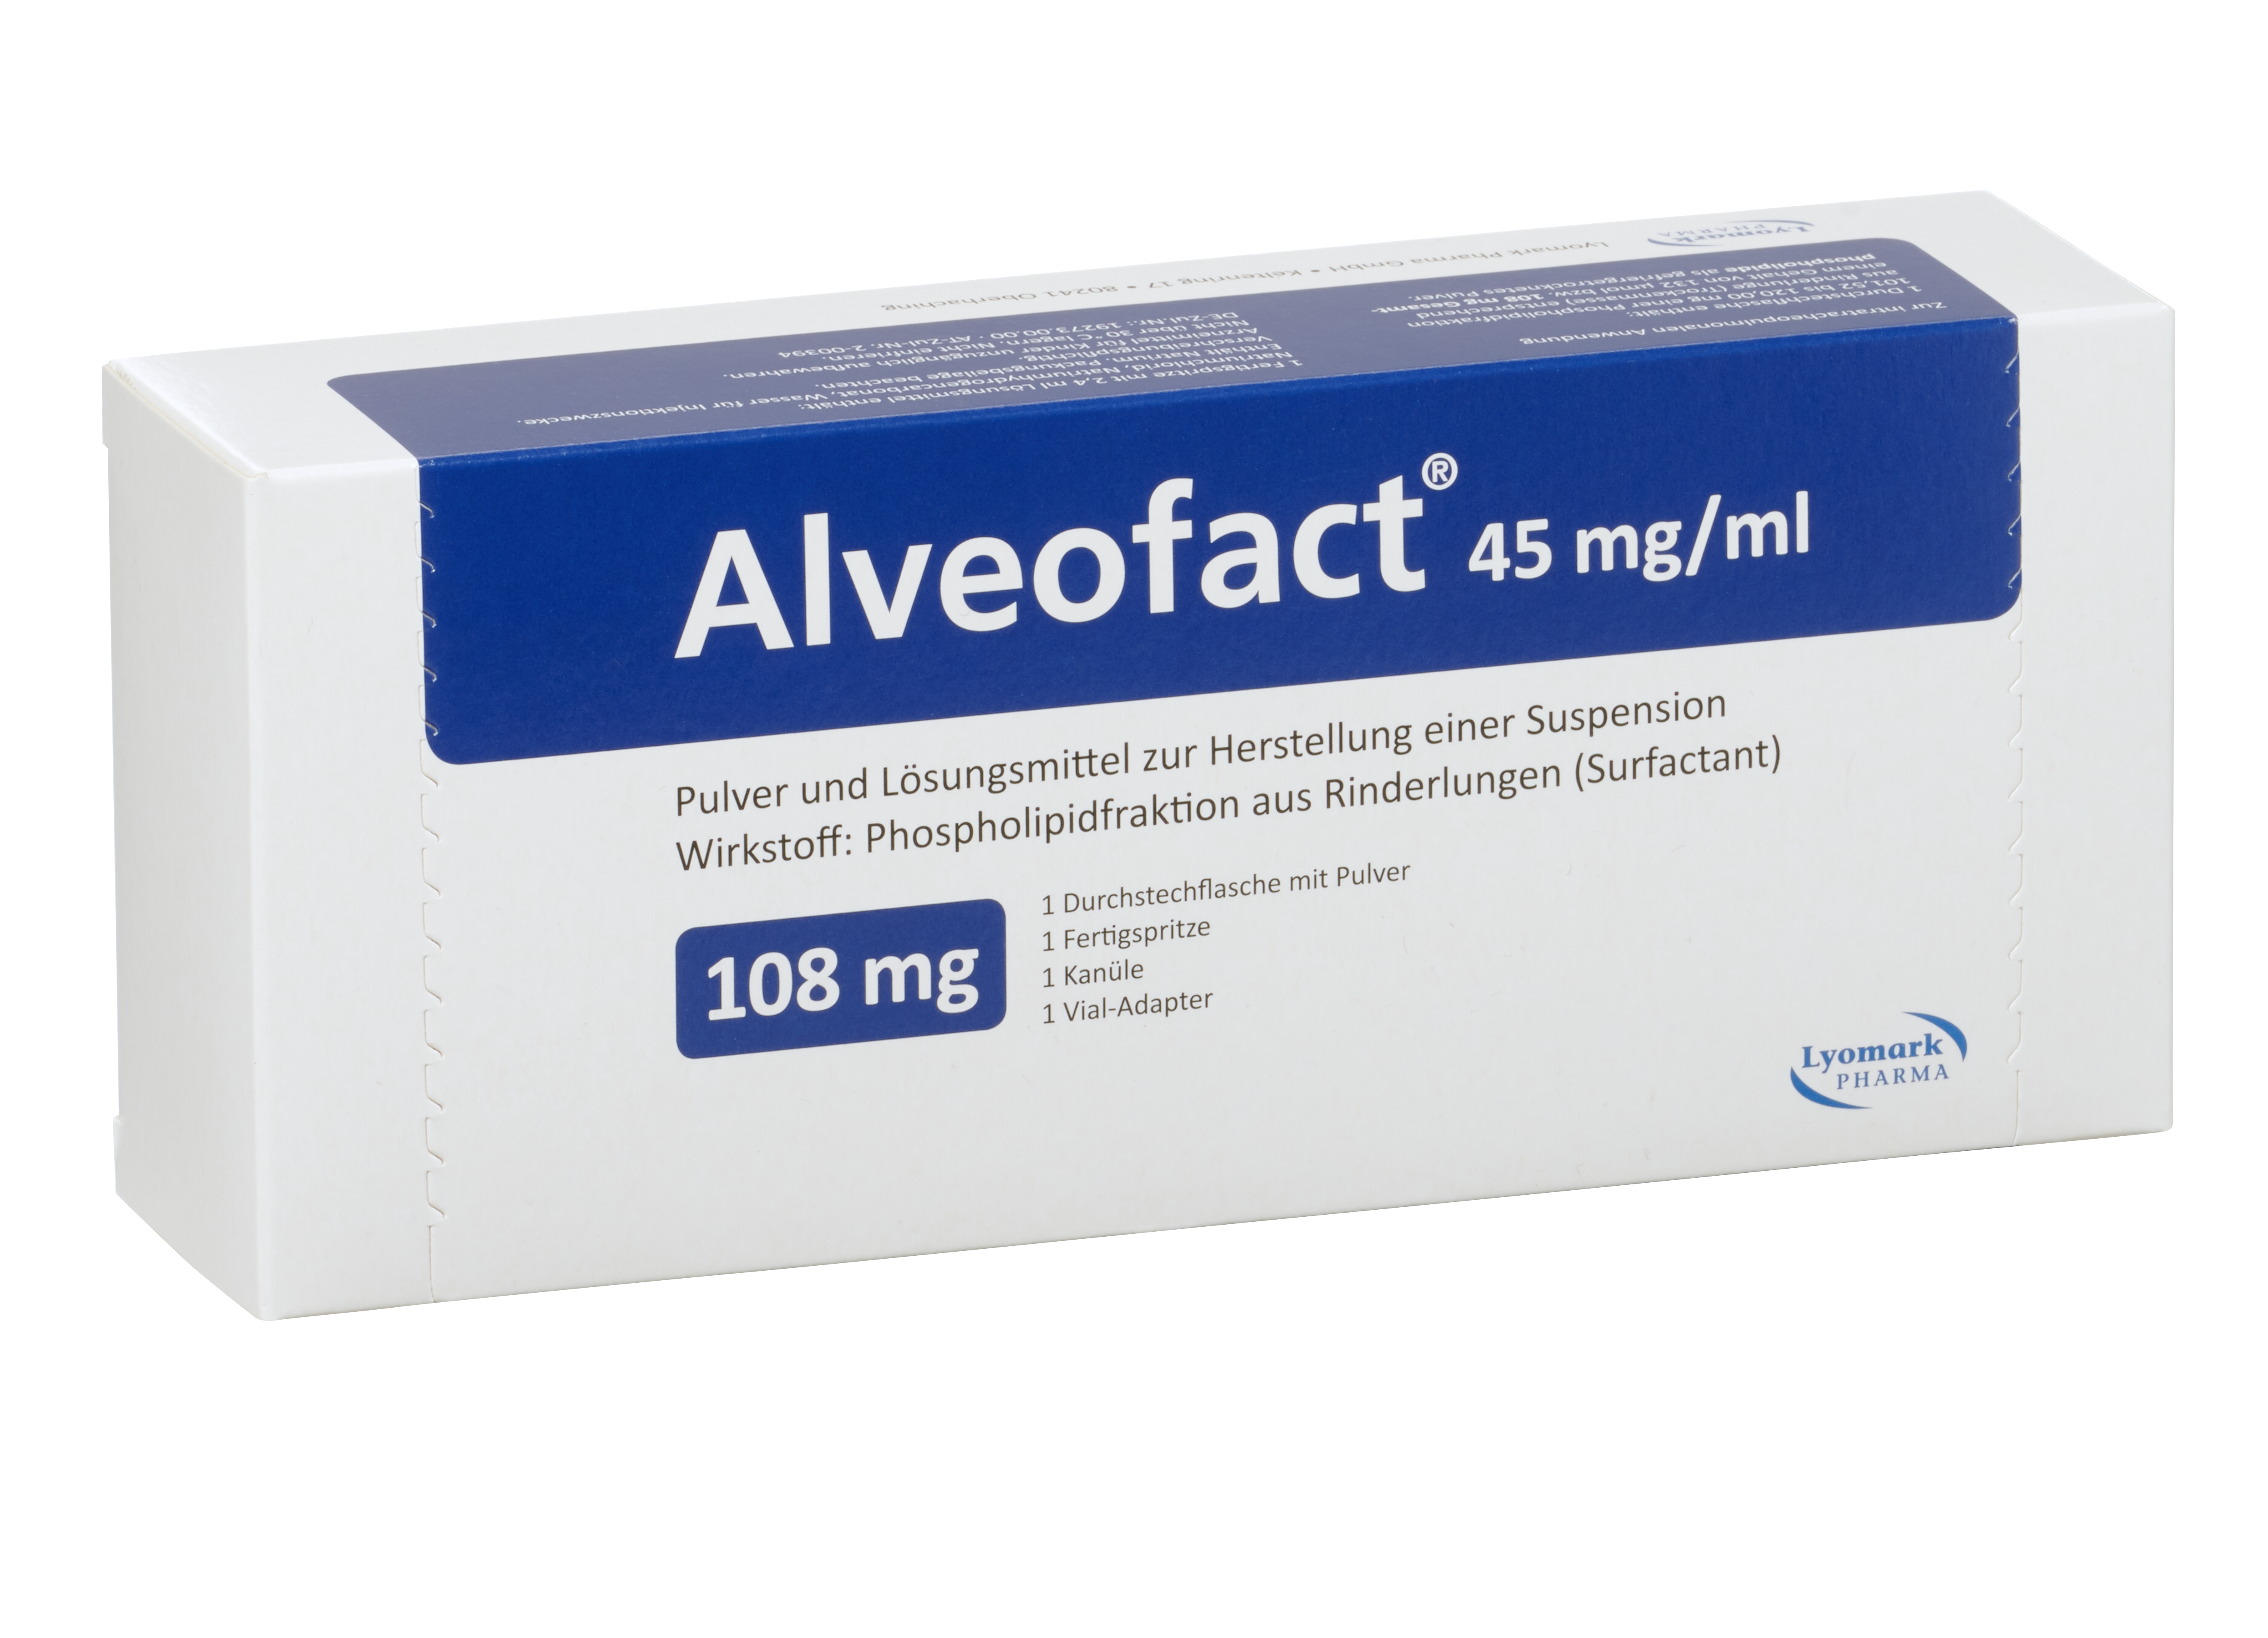 Alveofact® - Avoidance of plastic waste